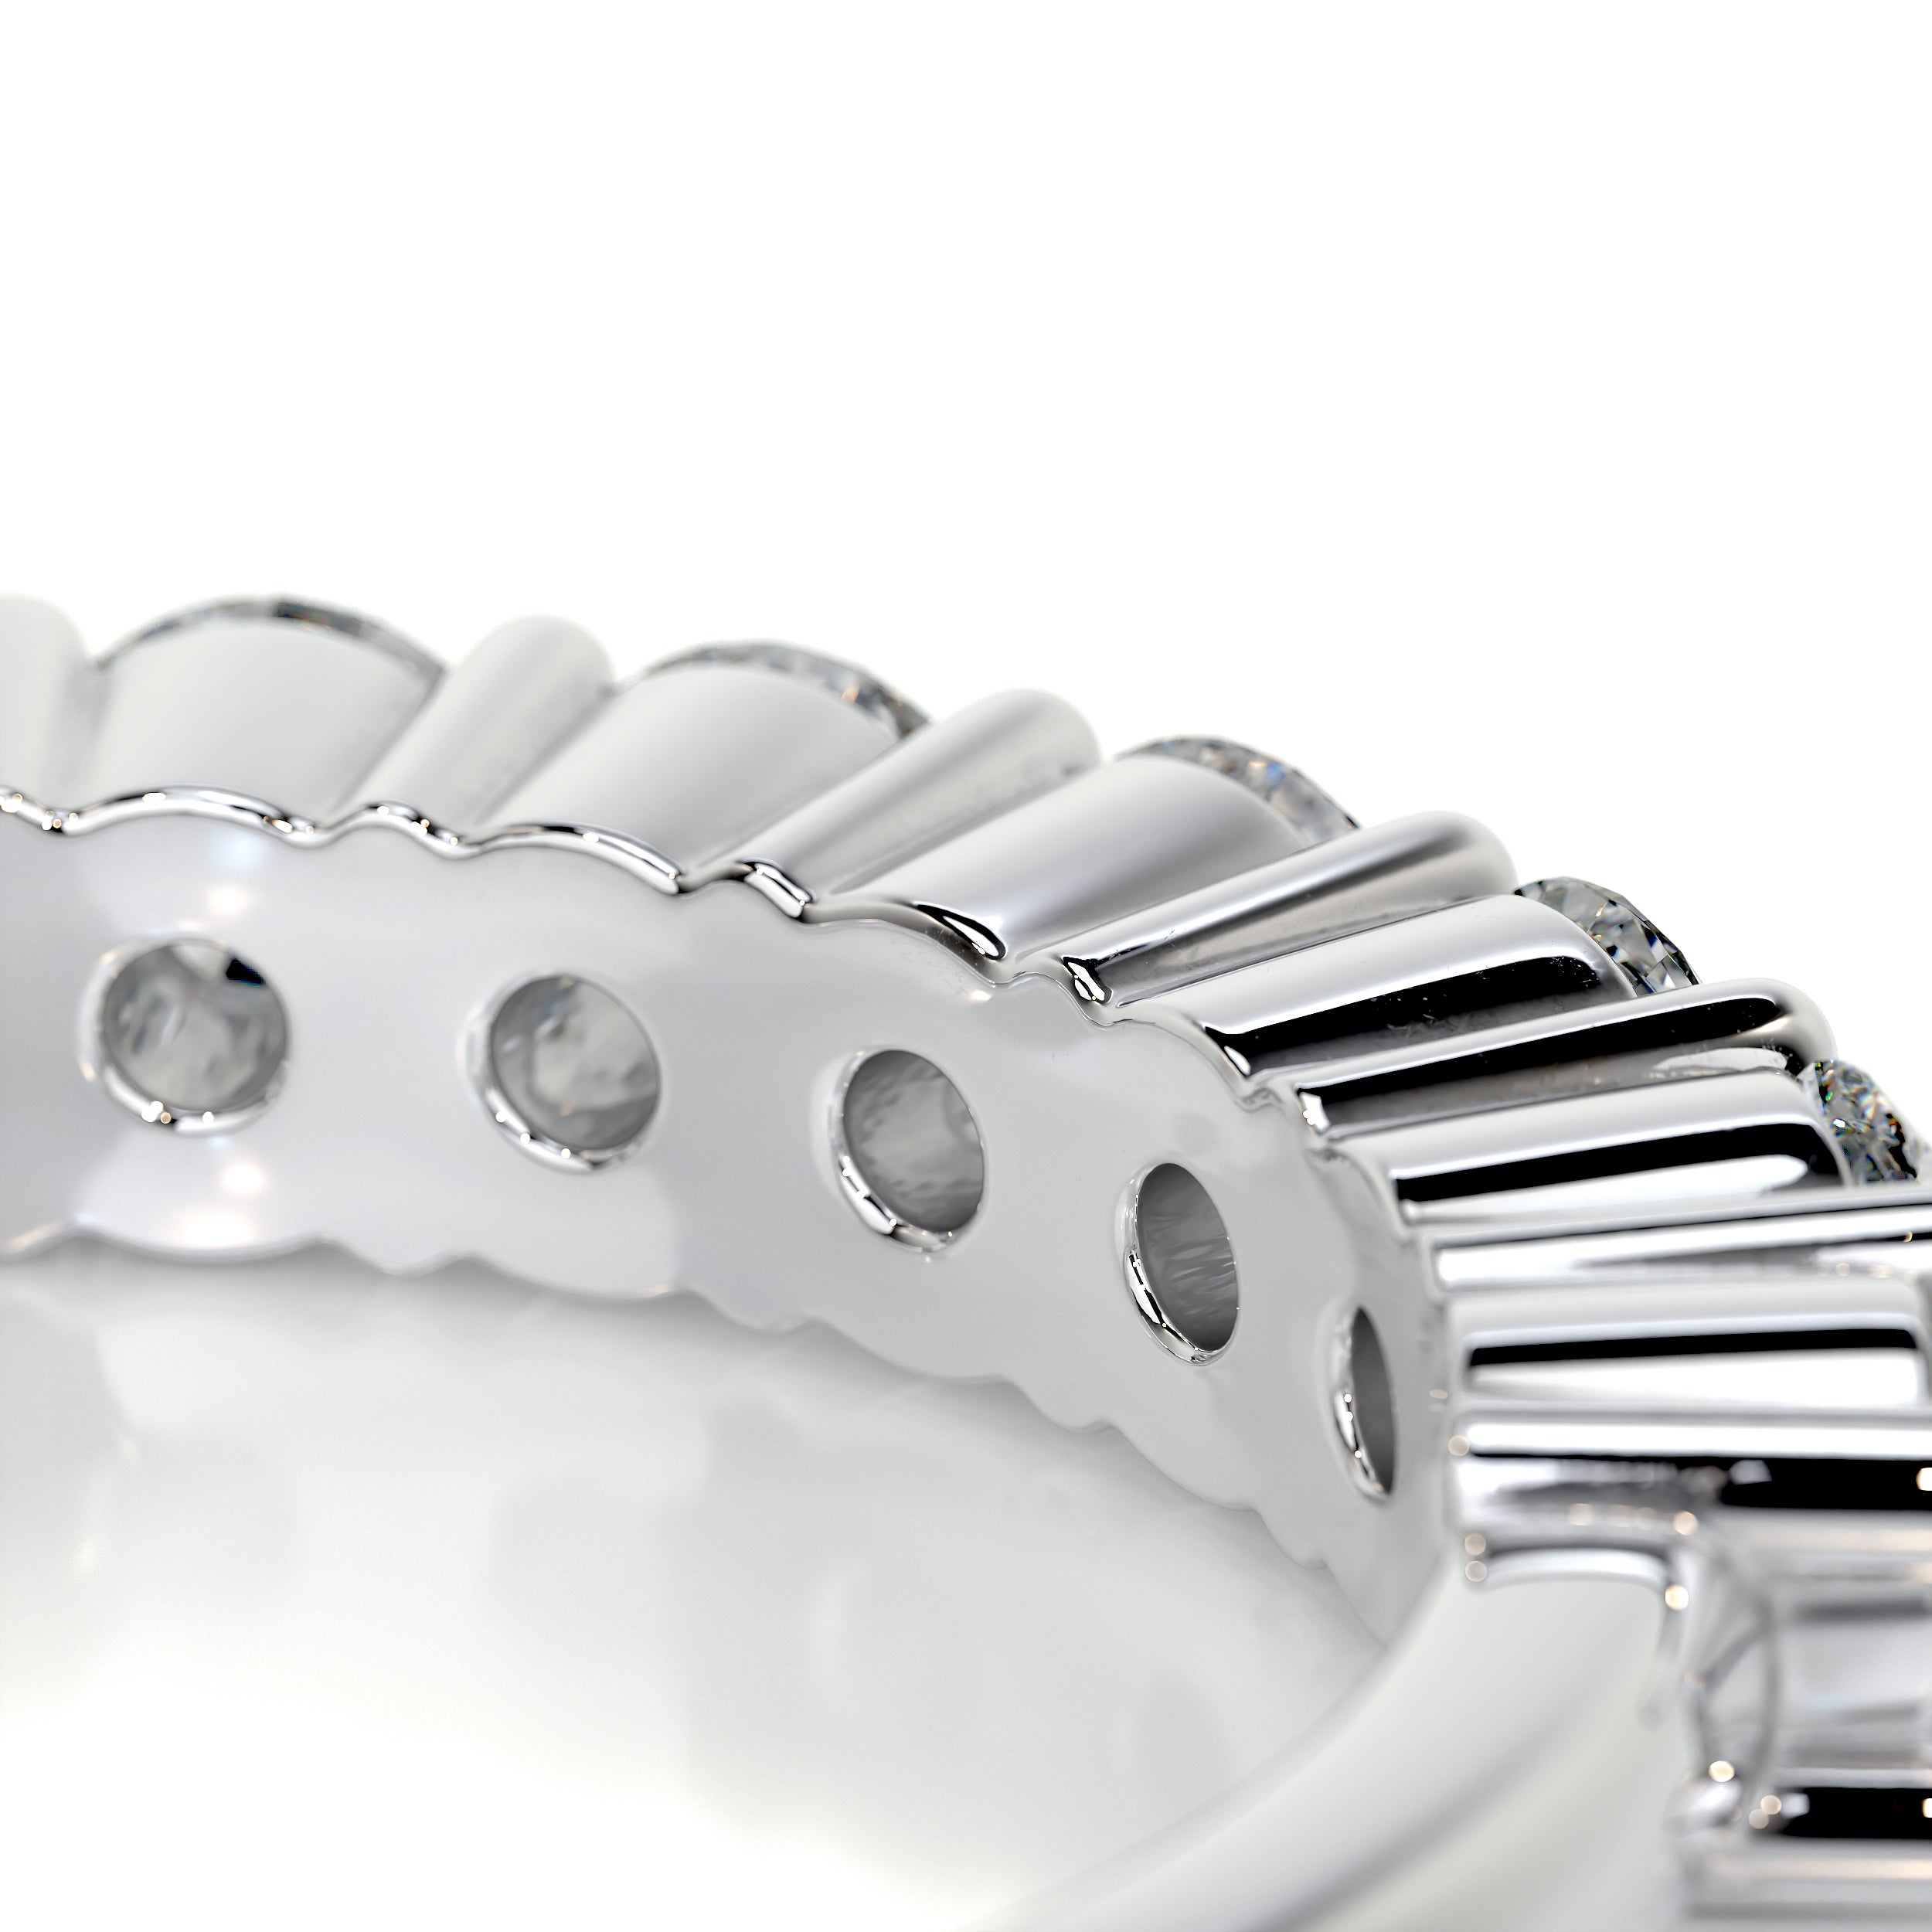 Catherine Diamond Wedding Ring   (0.75 Carat) -Platinum